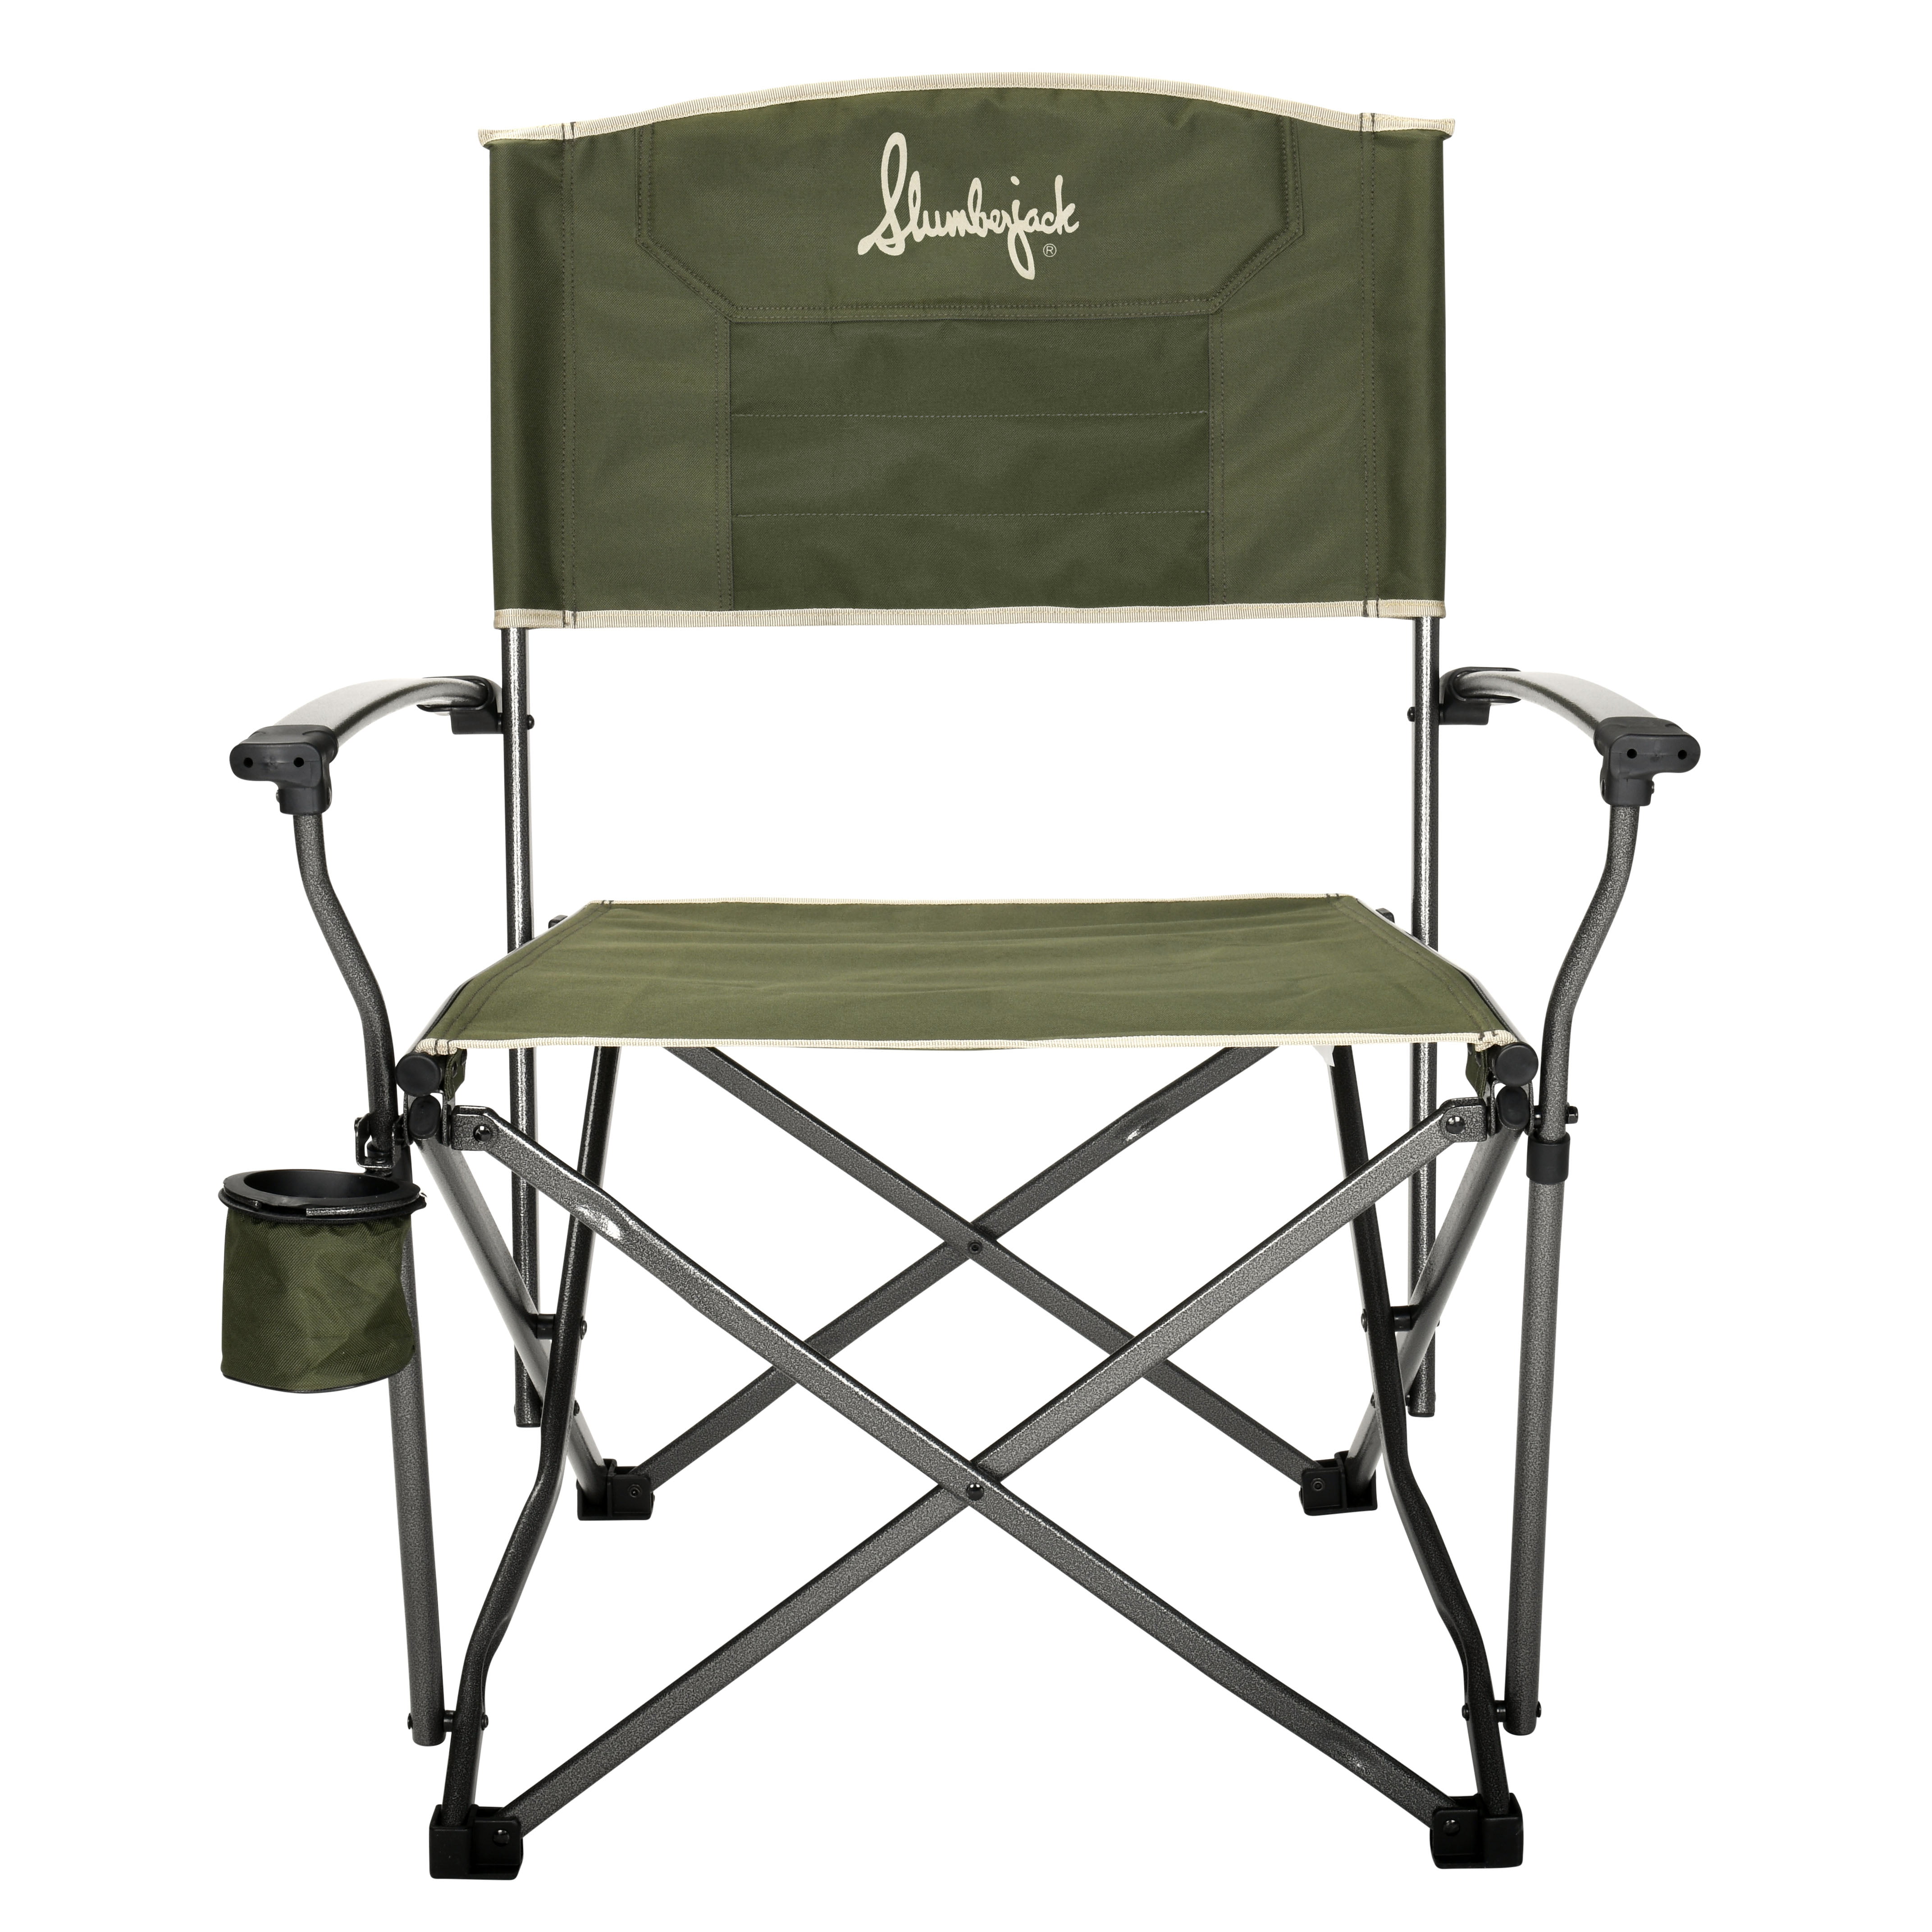 Slumberjack Lone Mesa Quad Folding Adult Director’s Chair $12.50 + Free Shipping w/ Walmart+ or on $35+